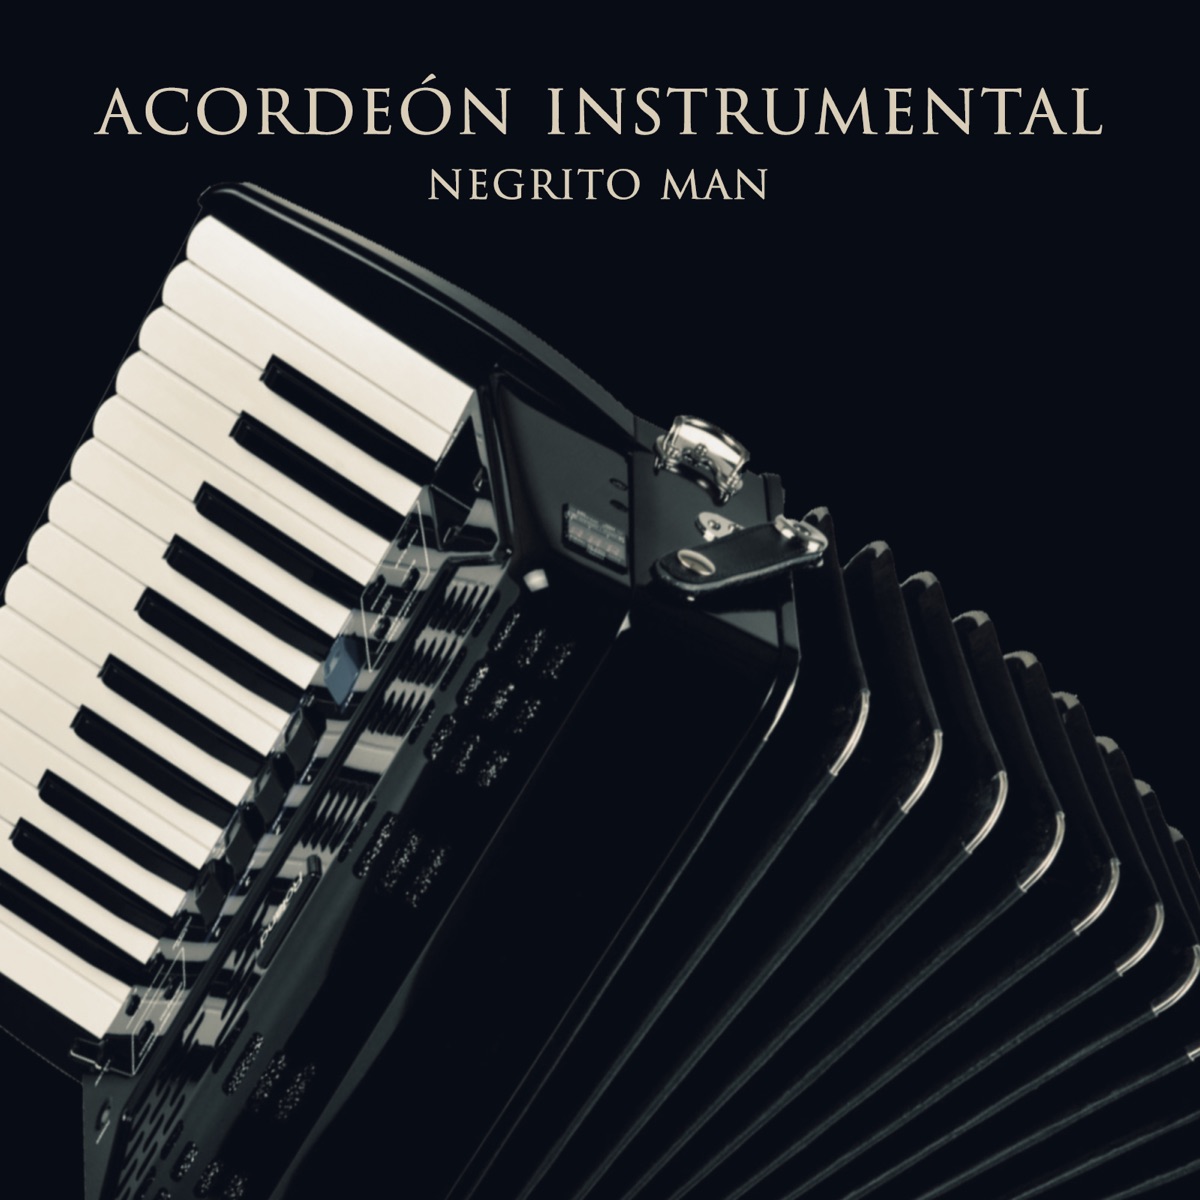 Acordeón Instrumental by Negrito Man on Apple Music